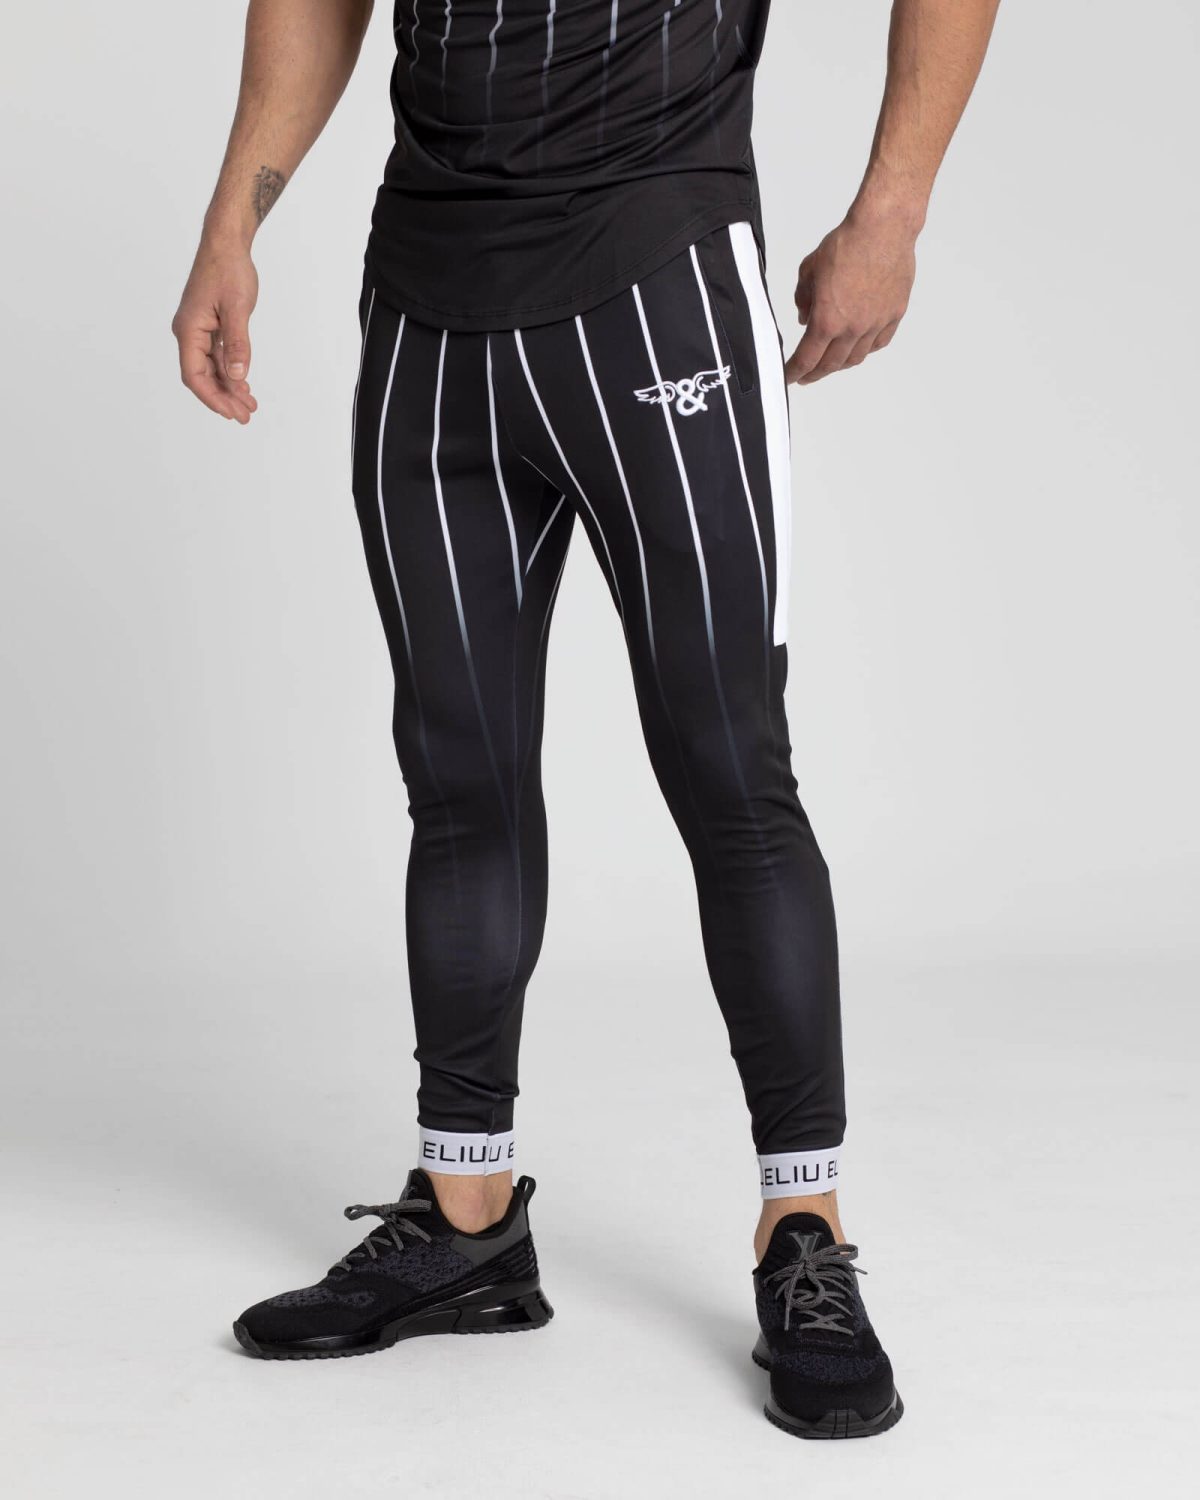 Pantalones de chándal Stripes. Estilo urbano de ELIU streetwear.